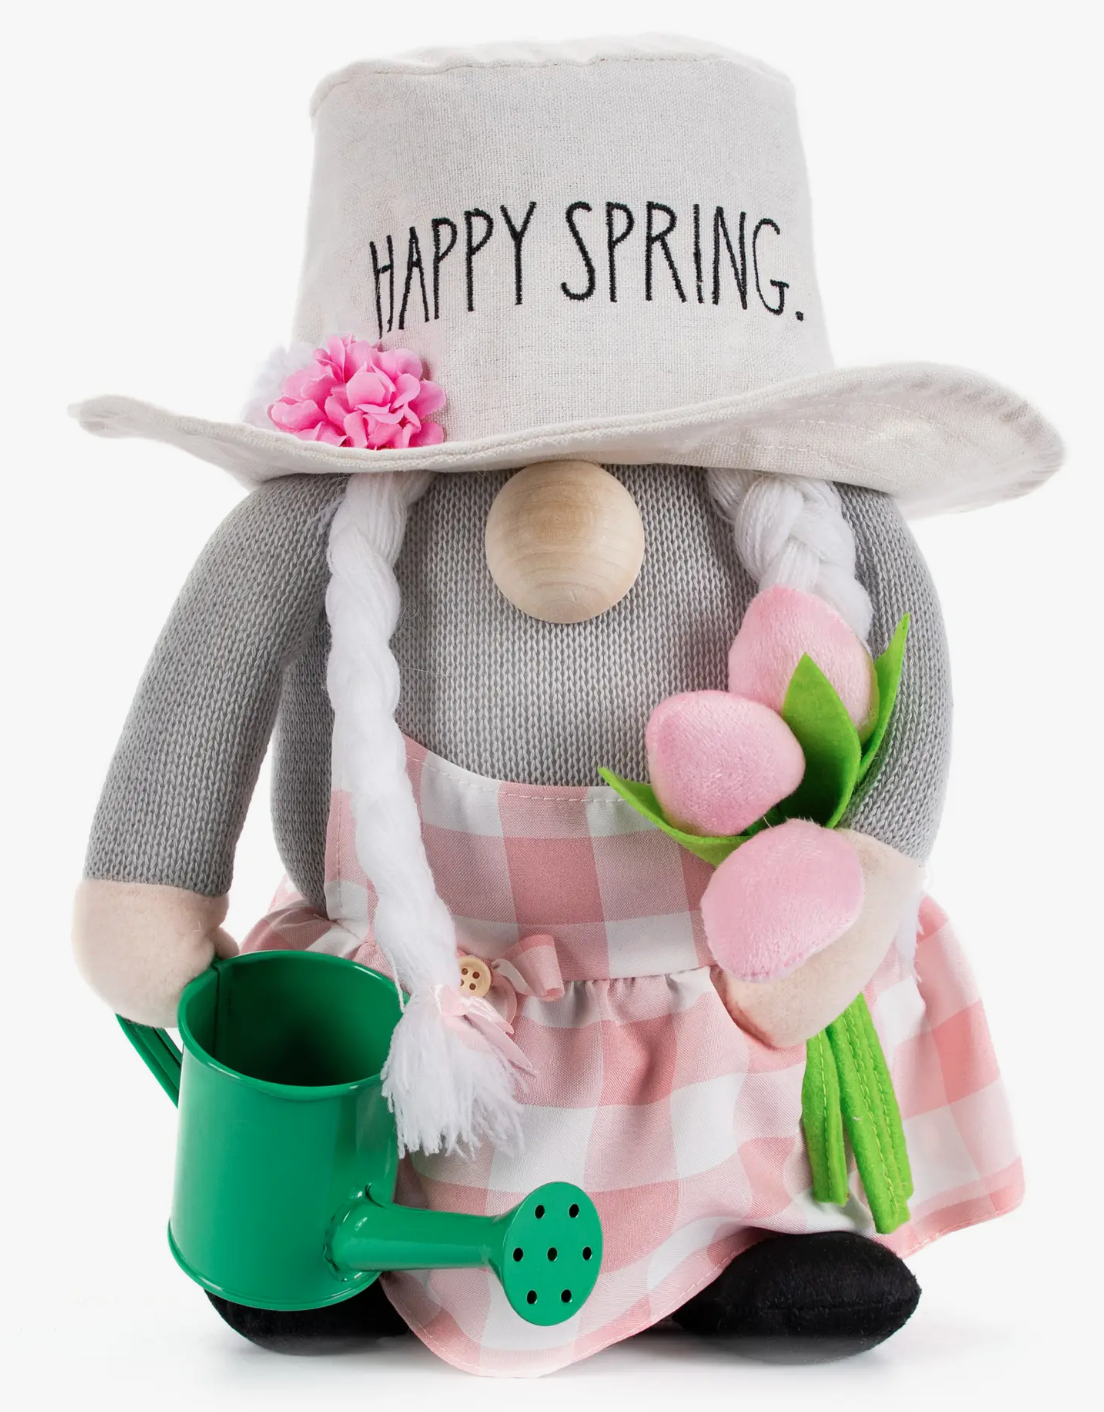 Happy Spring Garden Gnome